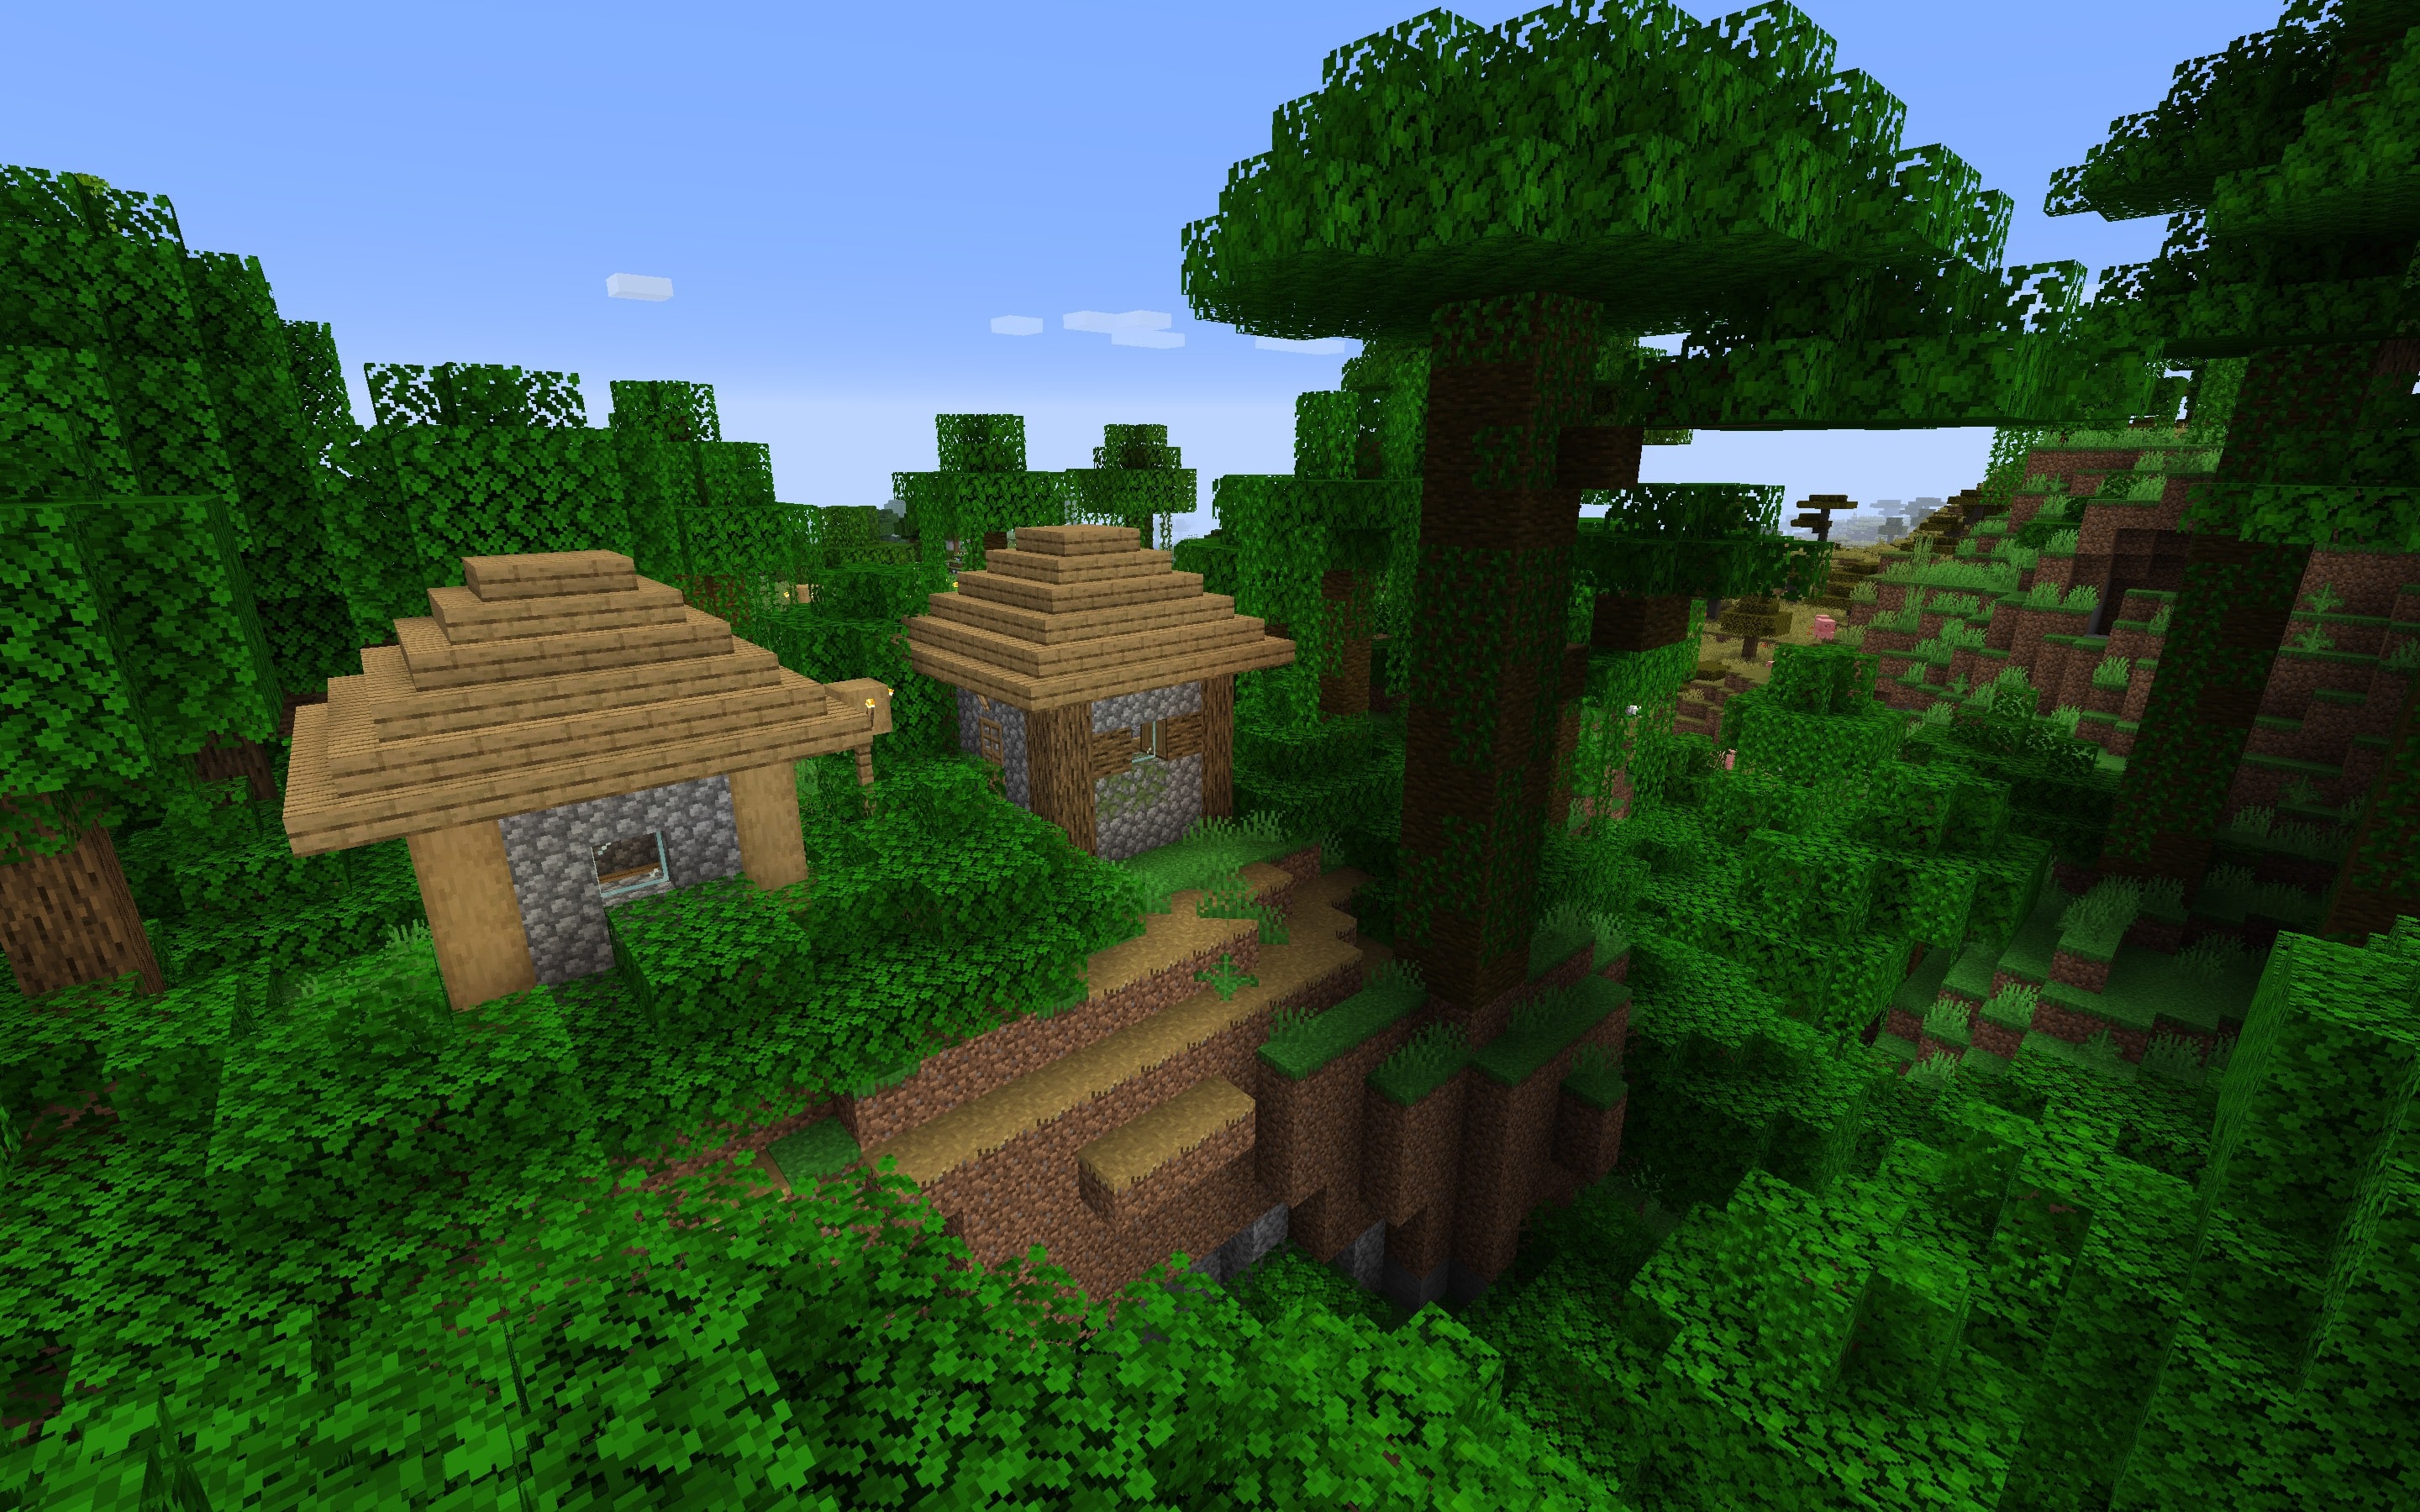 Jungle Village - Minecraft 1.14 Seed